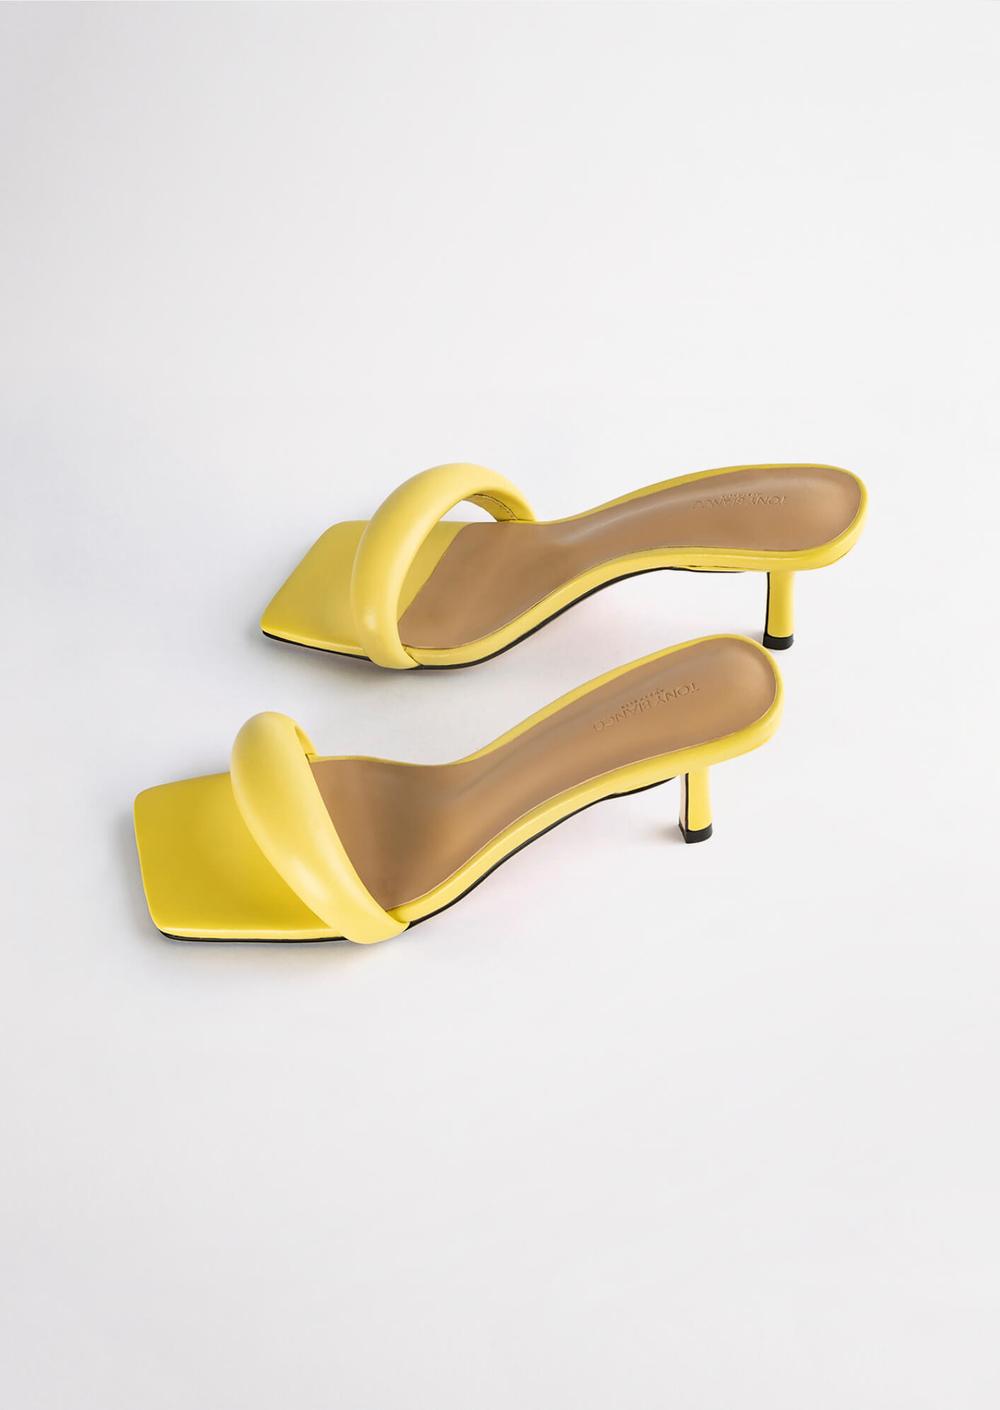 ANGEL SLIP ON - TONY BIANCO - 10, 5, 6, 6.5, 7, 7.5, 8, 8.5, 9, 9.5, musk, on sale, womens footwear, yellow - Stomp Shoes Darwin